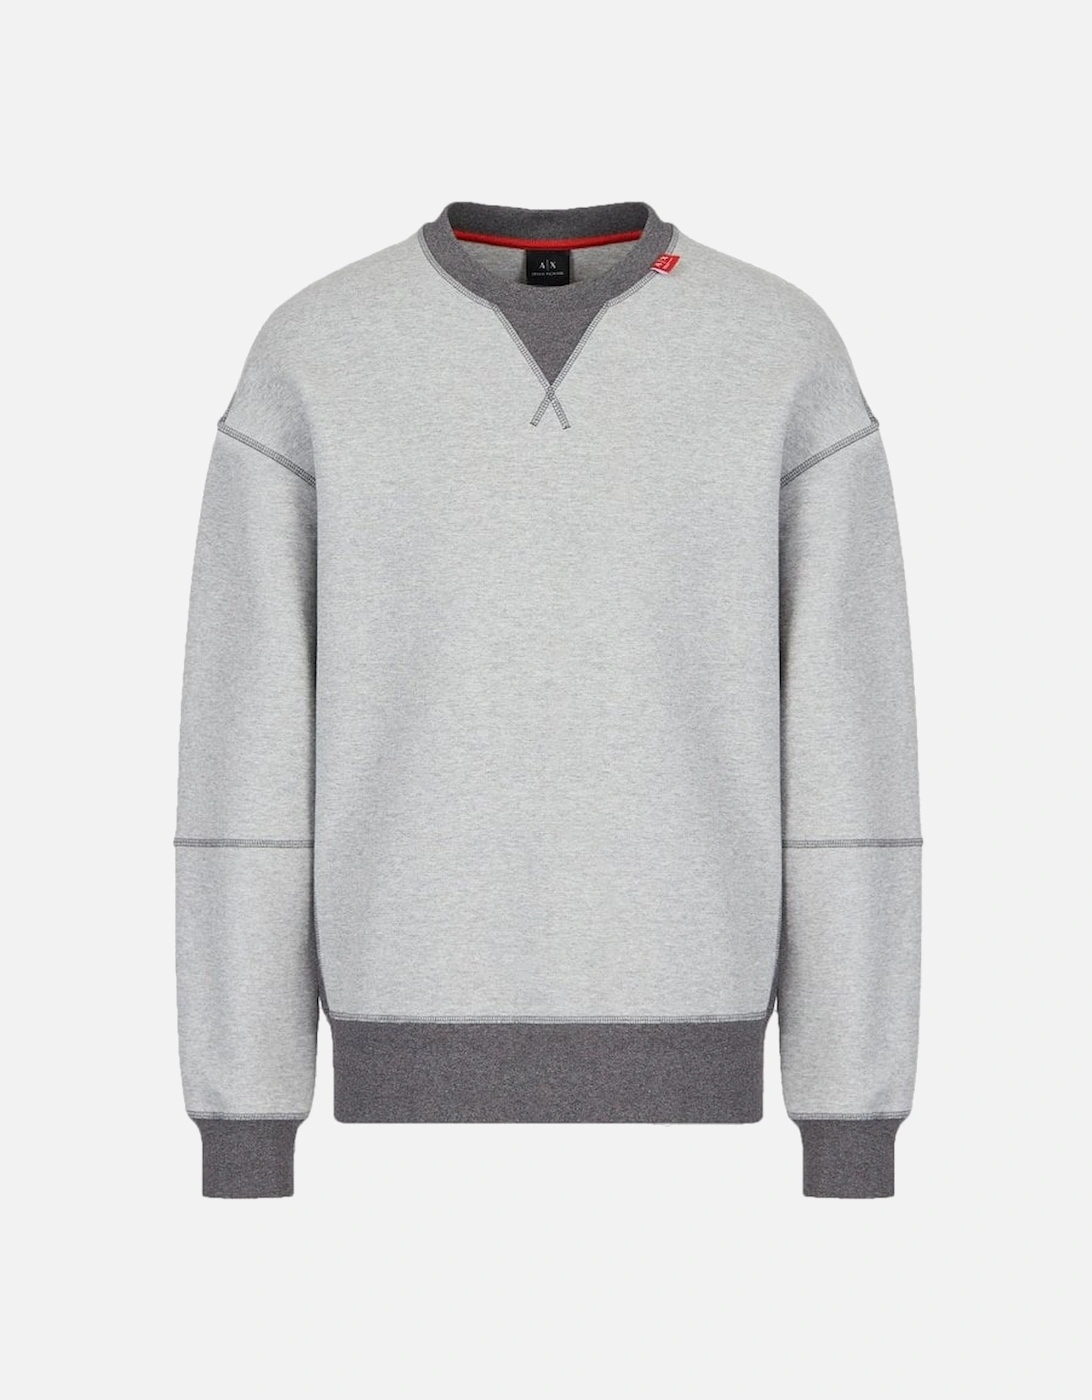 A|X Mens Jersey Sweatshirt Grey Melange, 4 of 3